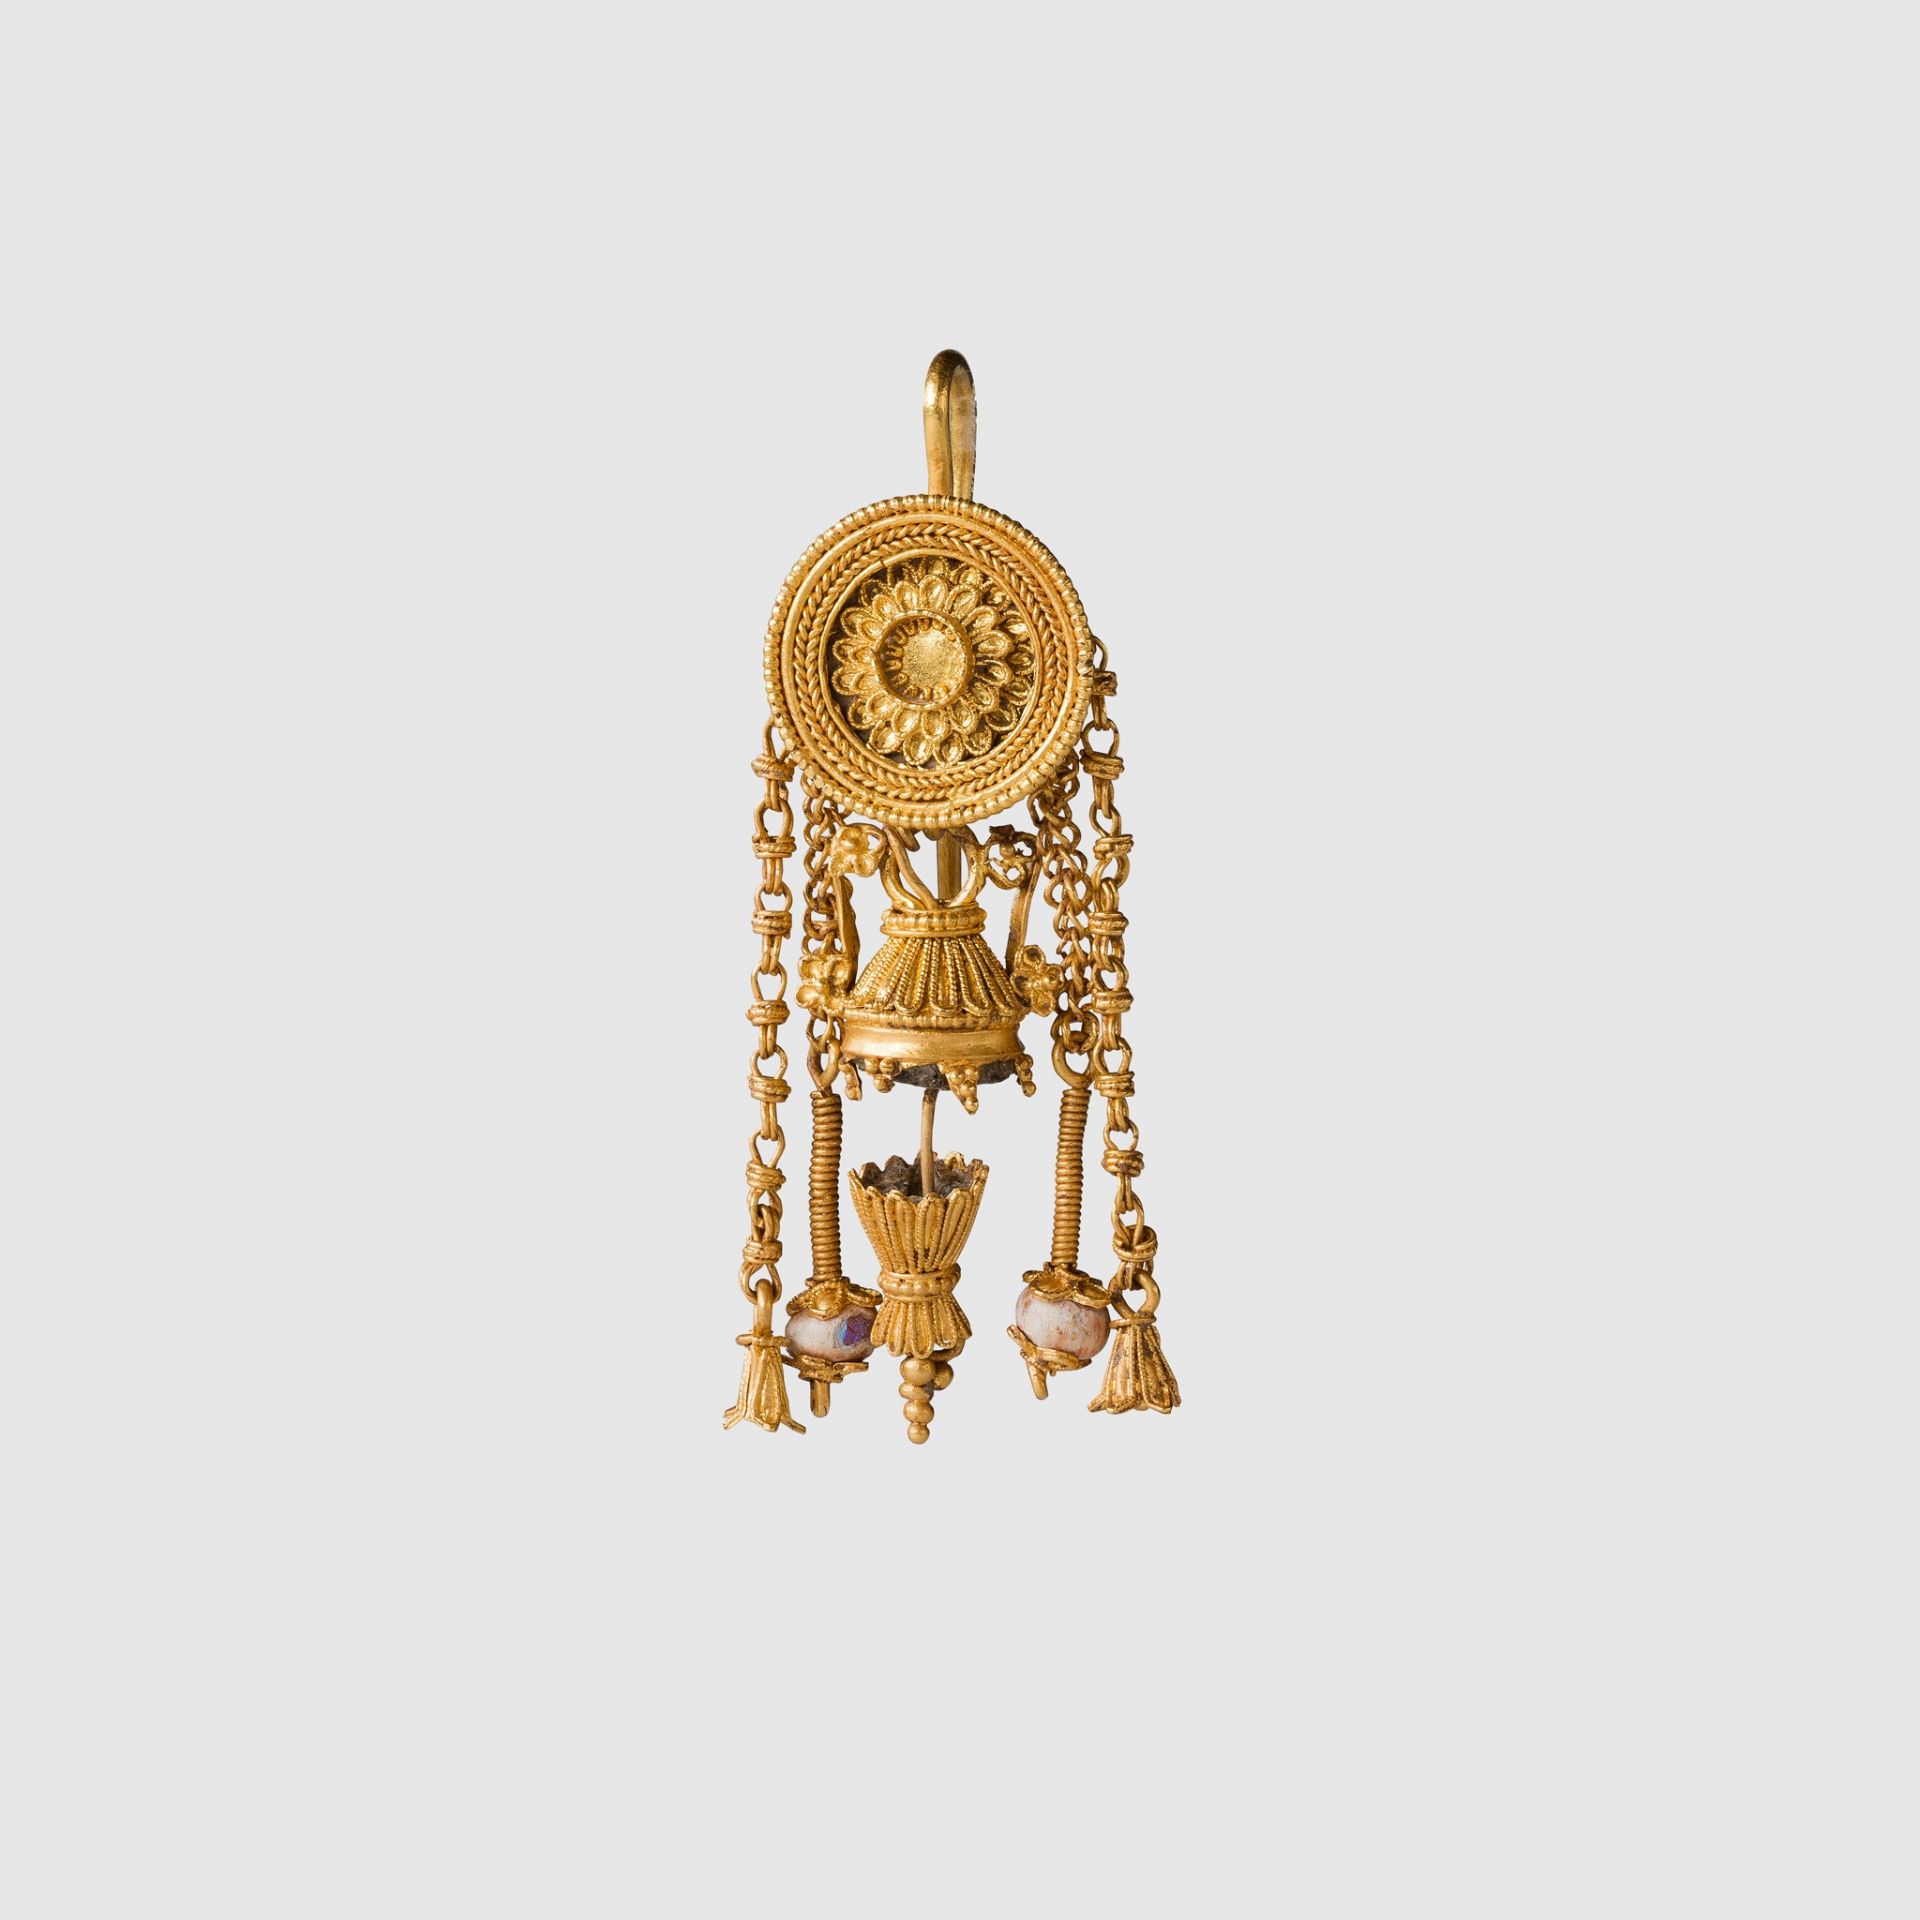 HELLENISTIC GOLD EARRING NEAR EAST, 3RD - 1ST CENTURY B.C.